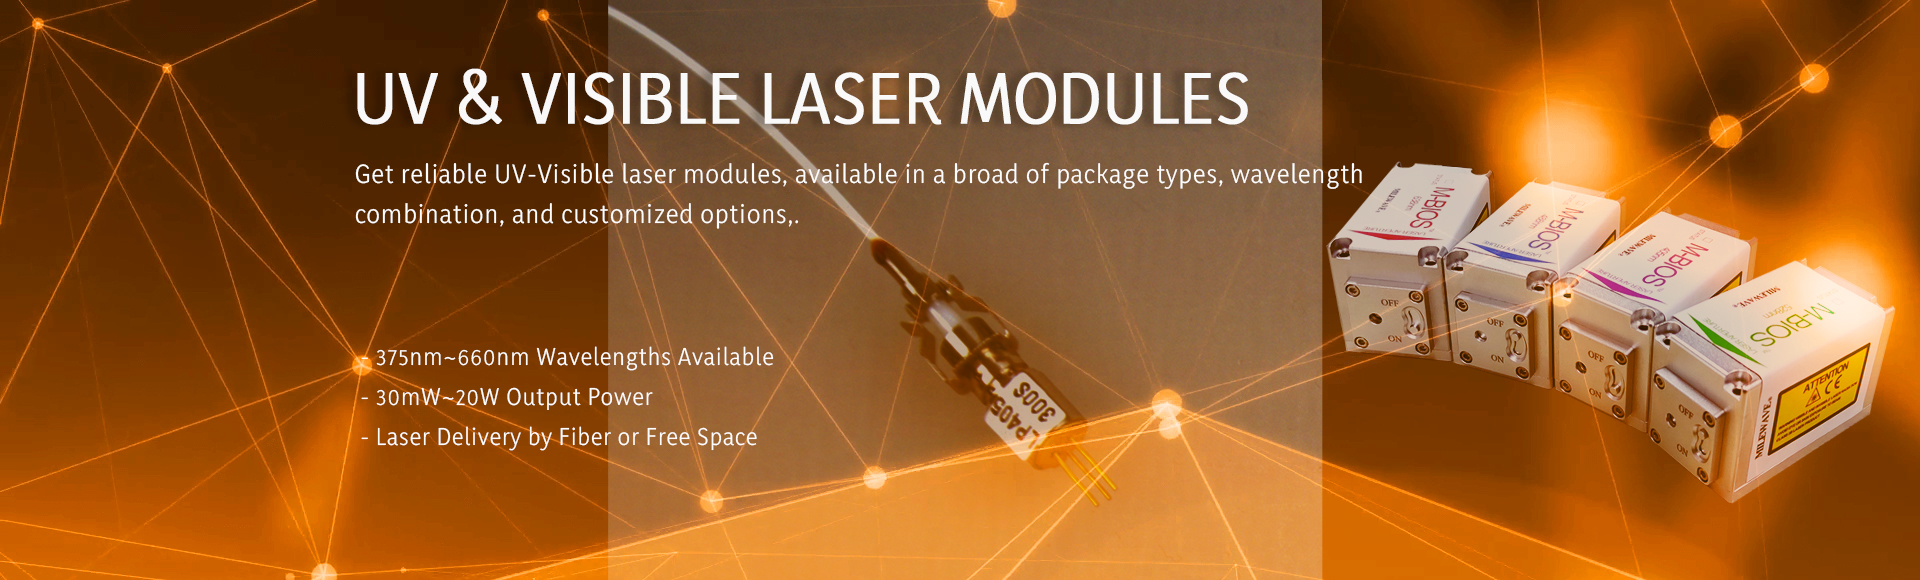 UV & Visible laser modules